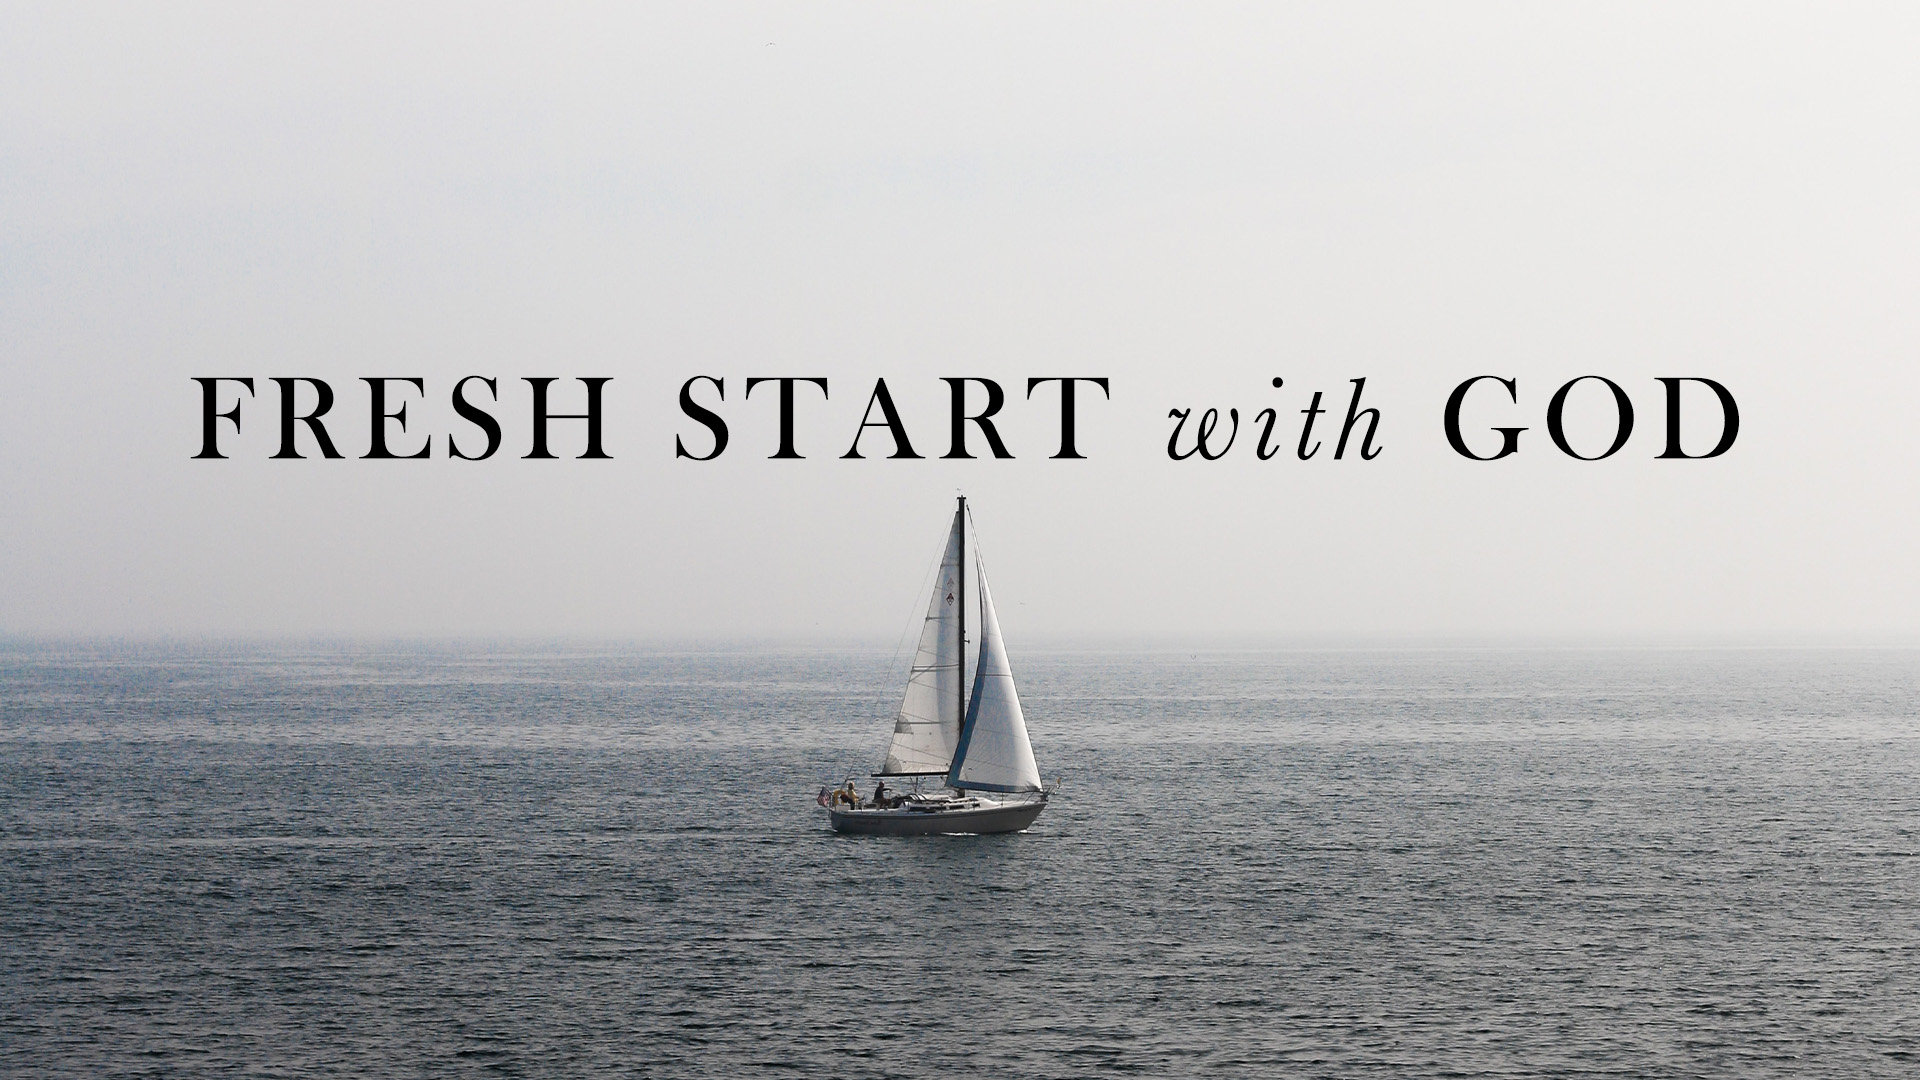 Fresh Start with God

Sunday | 9:00am
October 23rd
